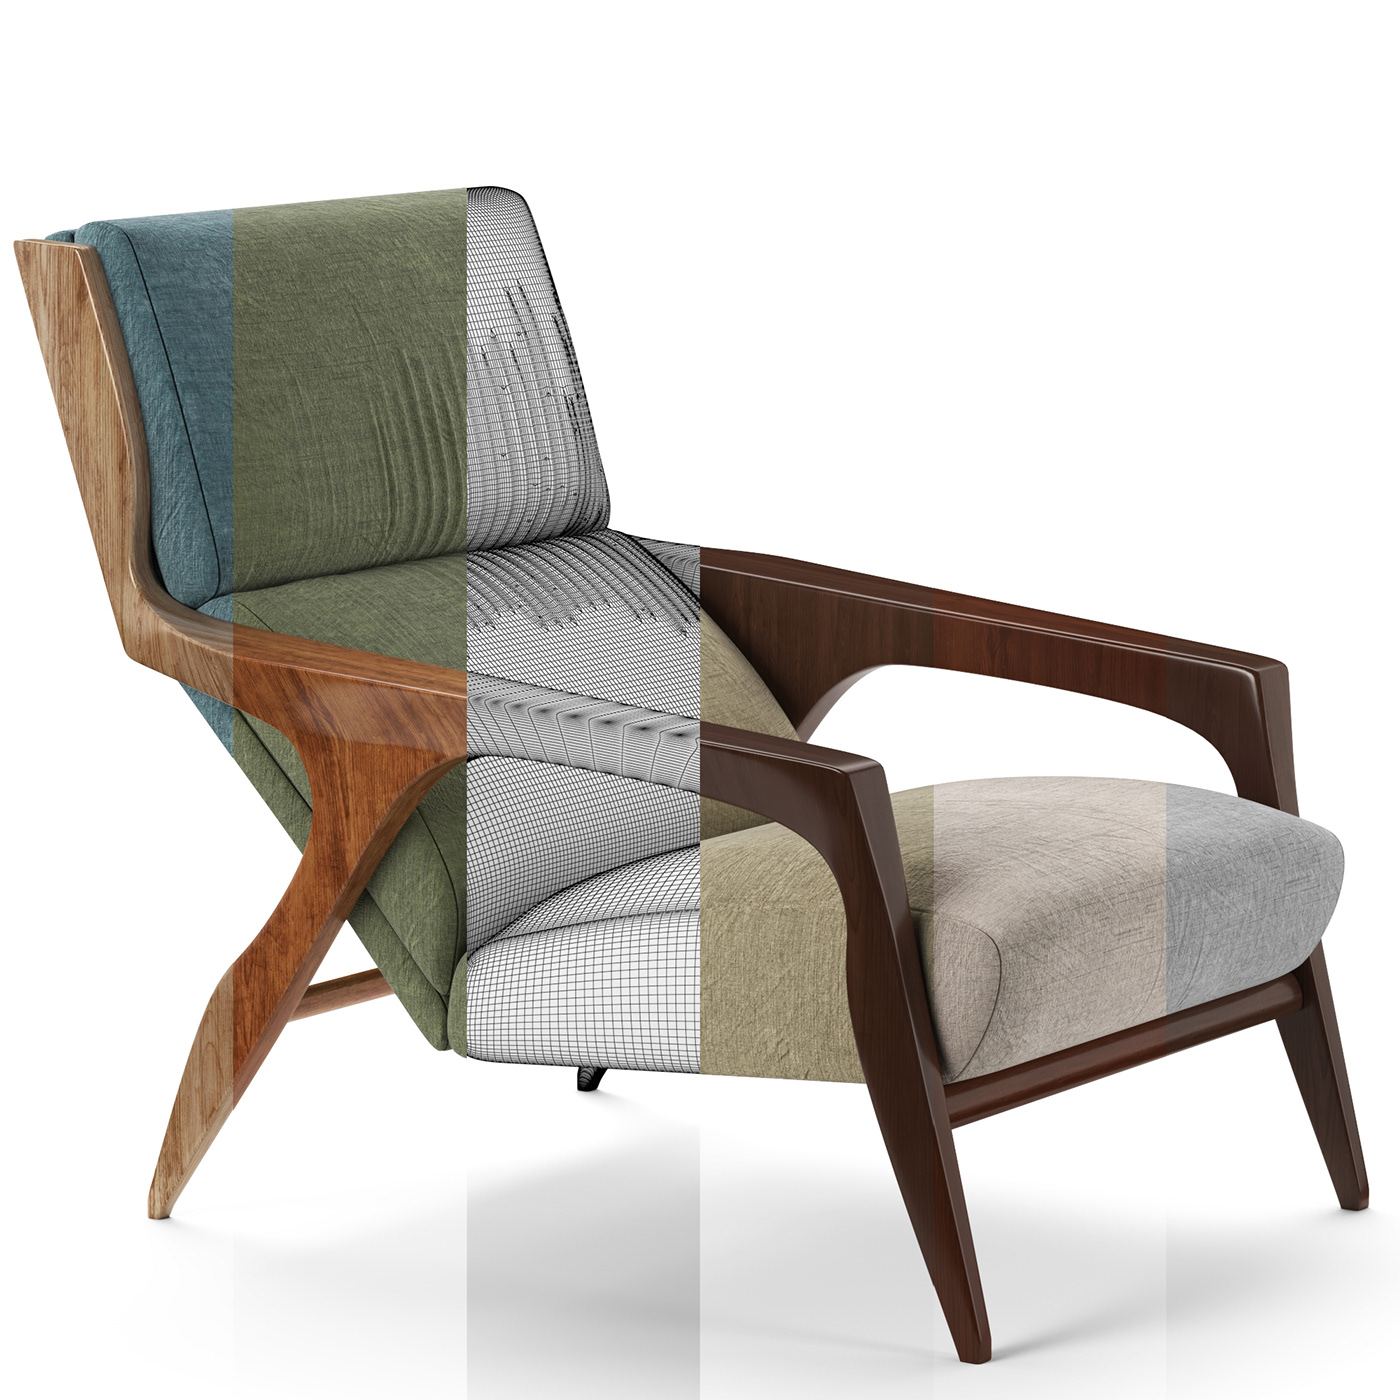 3dsmax chair design furnituredesign Interior modelling photorealistic productdesign Render vray